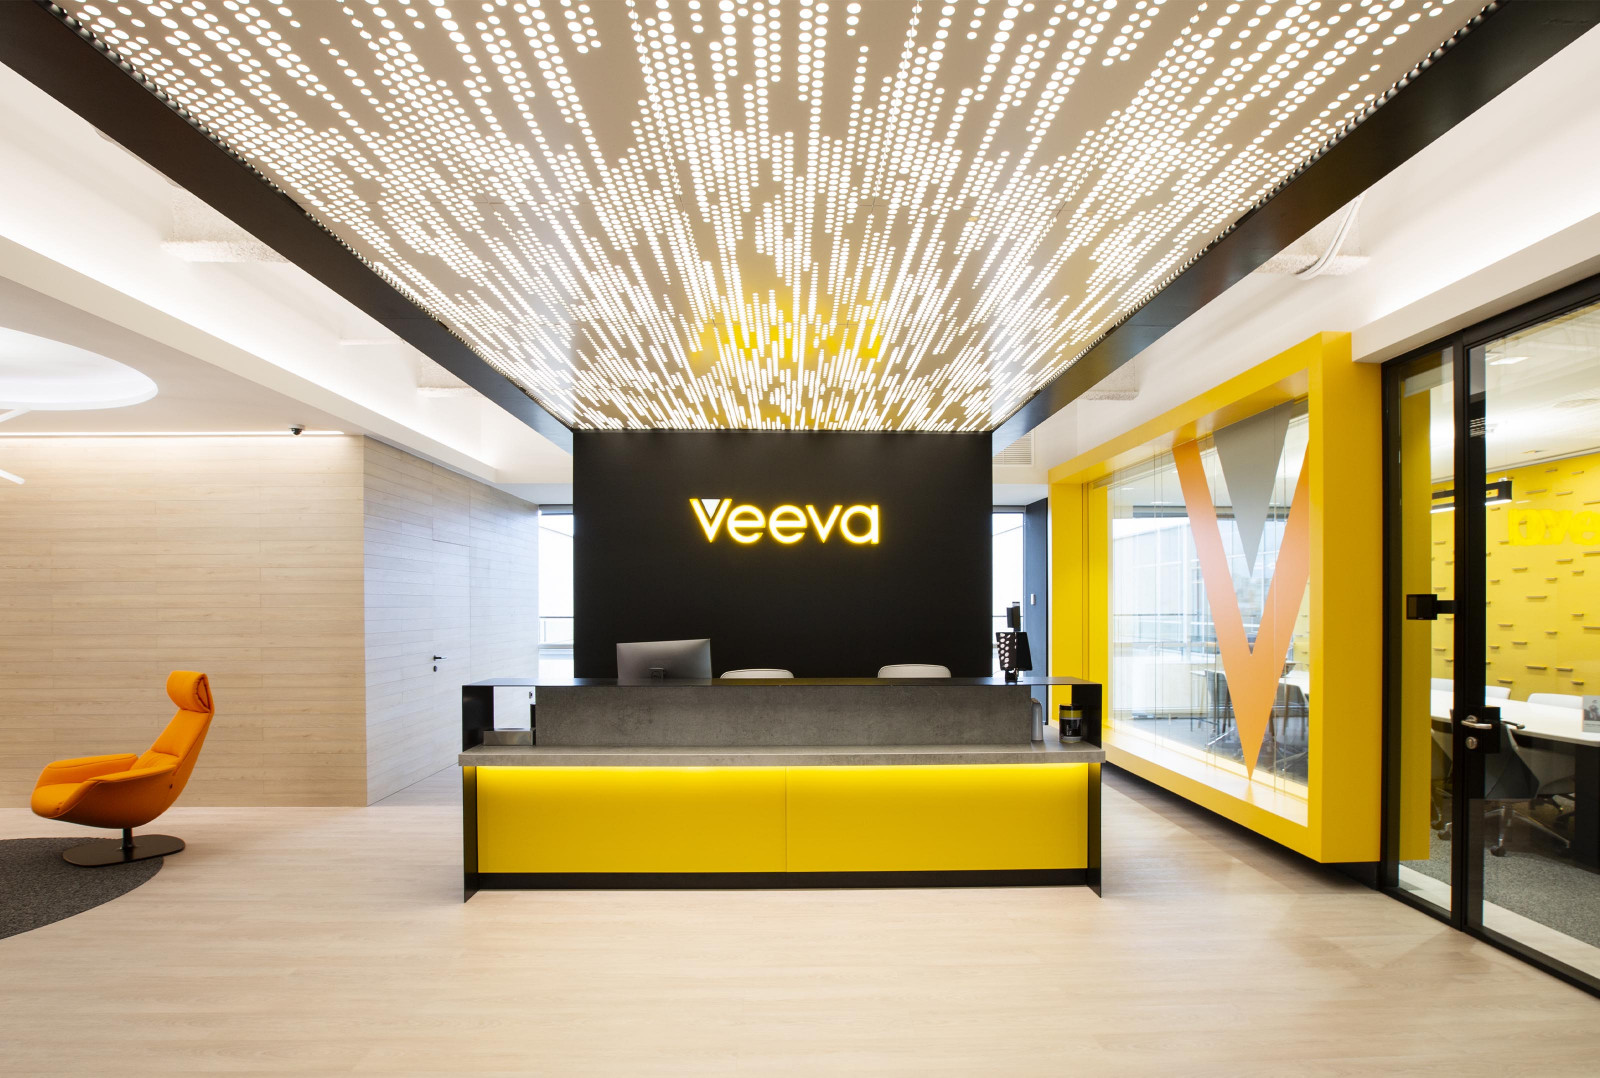 “Veeva Systems” Barcelona, Spain, Brereton Architects, Featuring: Vapor® Trail by Arktura